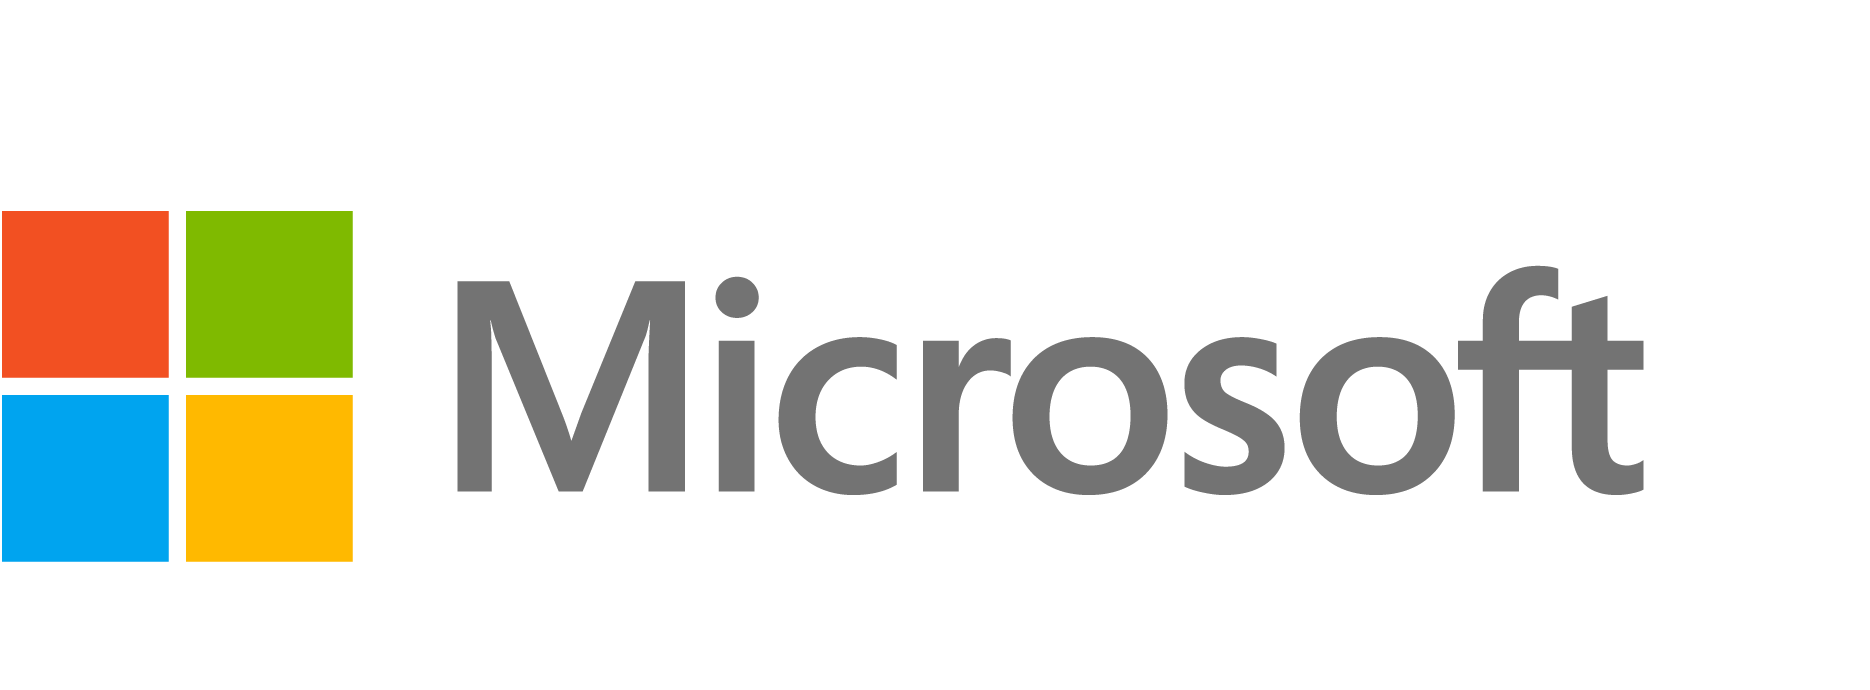 Microsoft-Logo-PNG-transparent_1